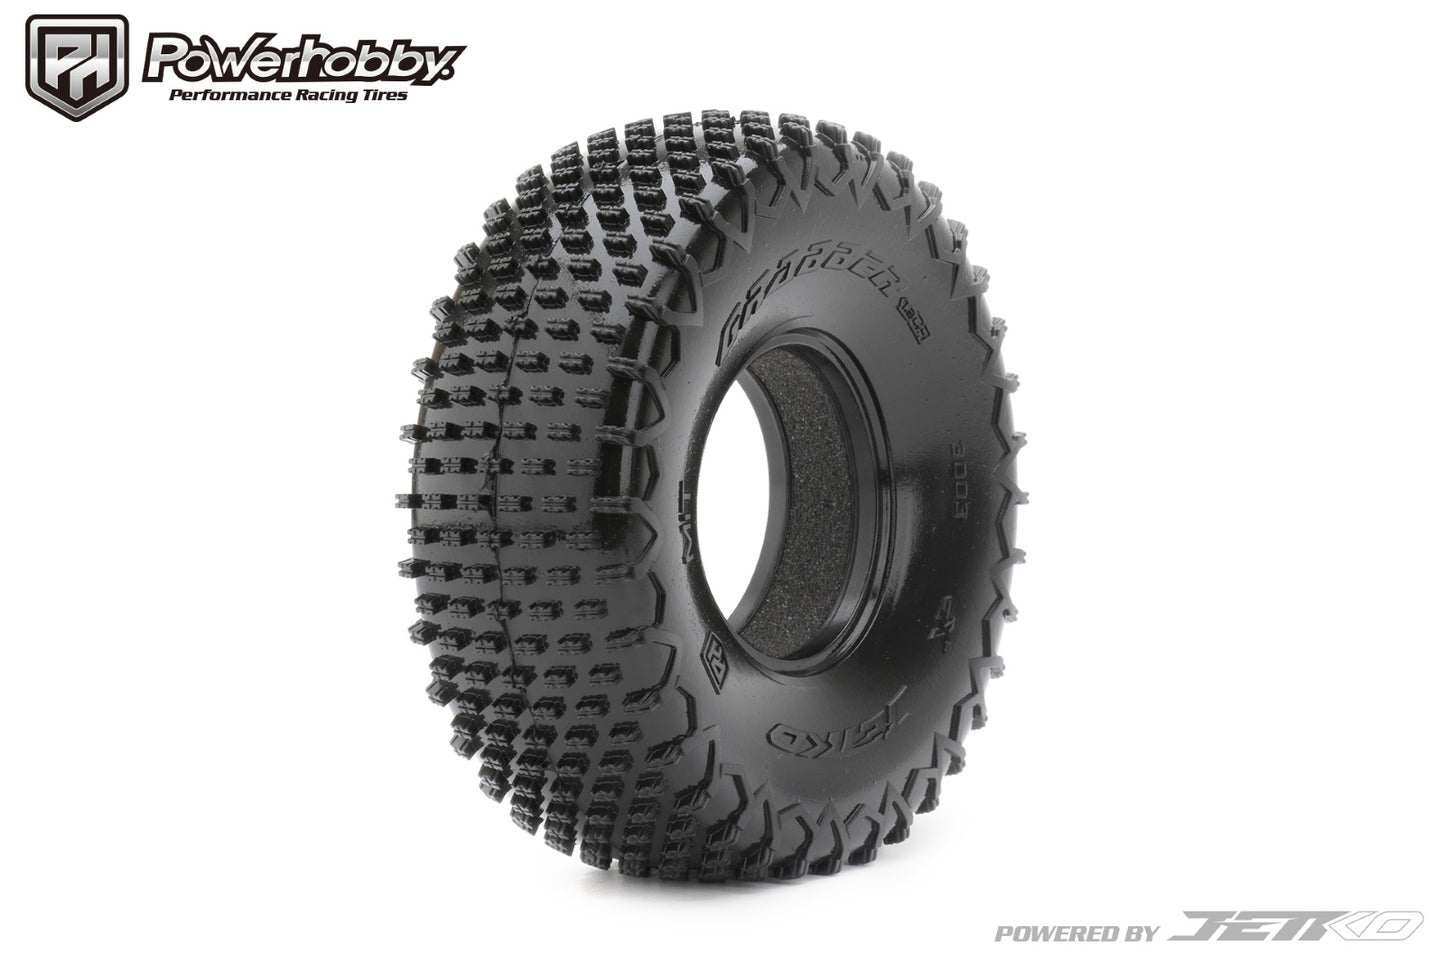 Powerhobby 1.9" Grabber Ultra Soft 1/10 Rock Crawler Tires w Foams (2) - PowerHobby